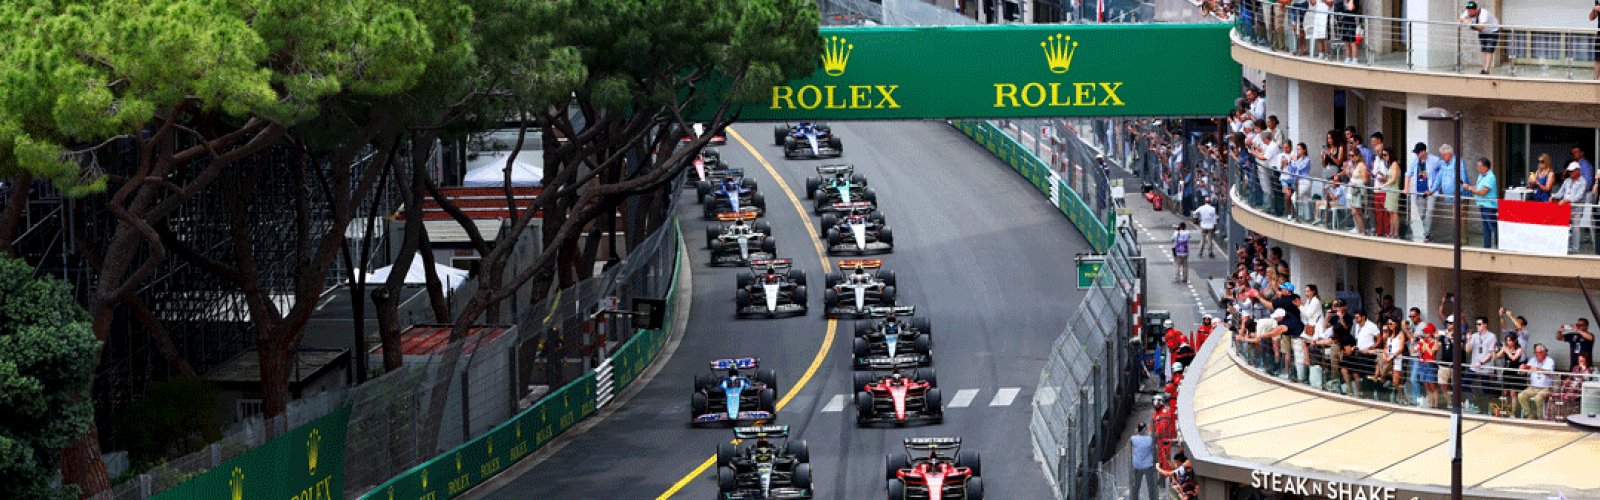 Formula 1 Grand Prix Circuit de Monaco